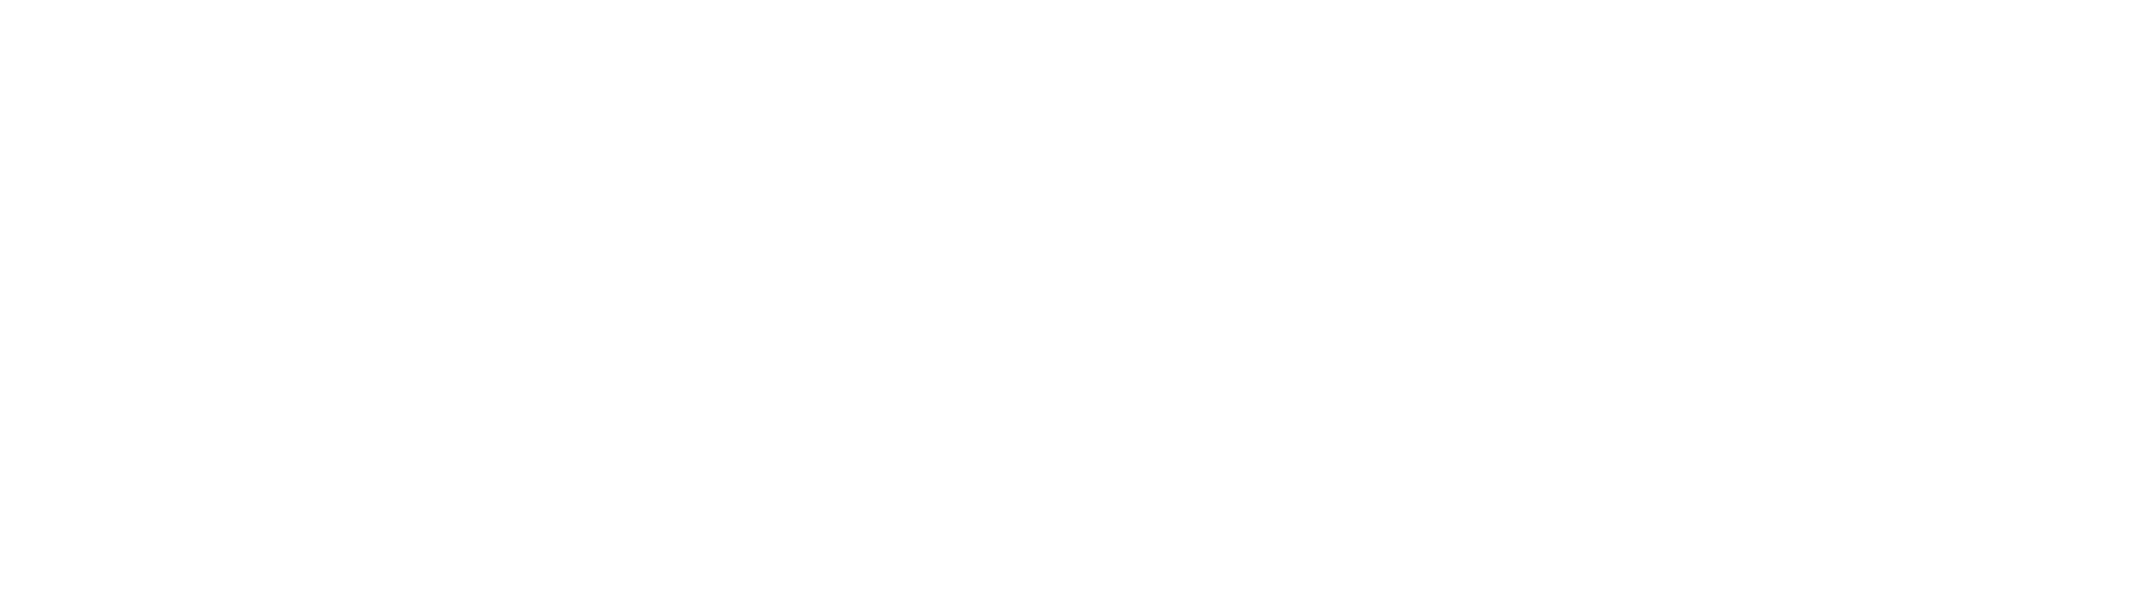 Team Kentucky Logo